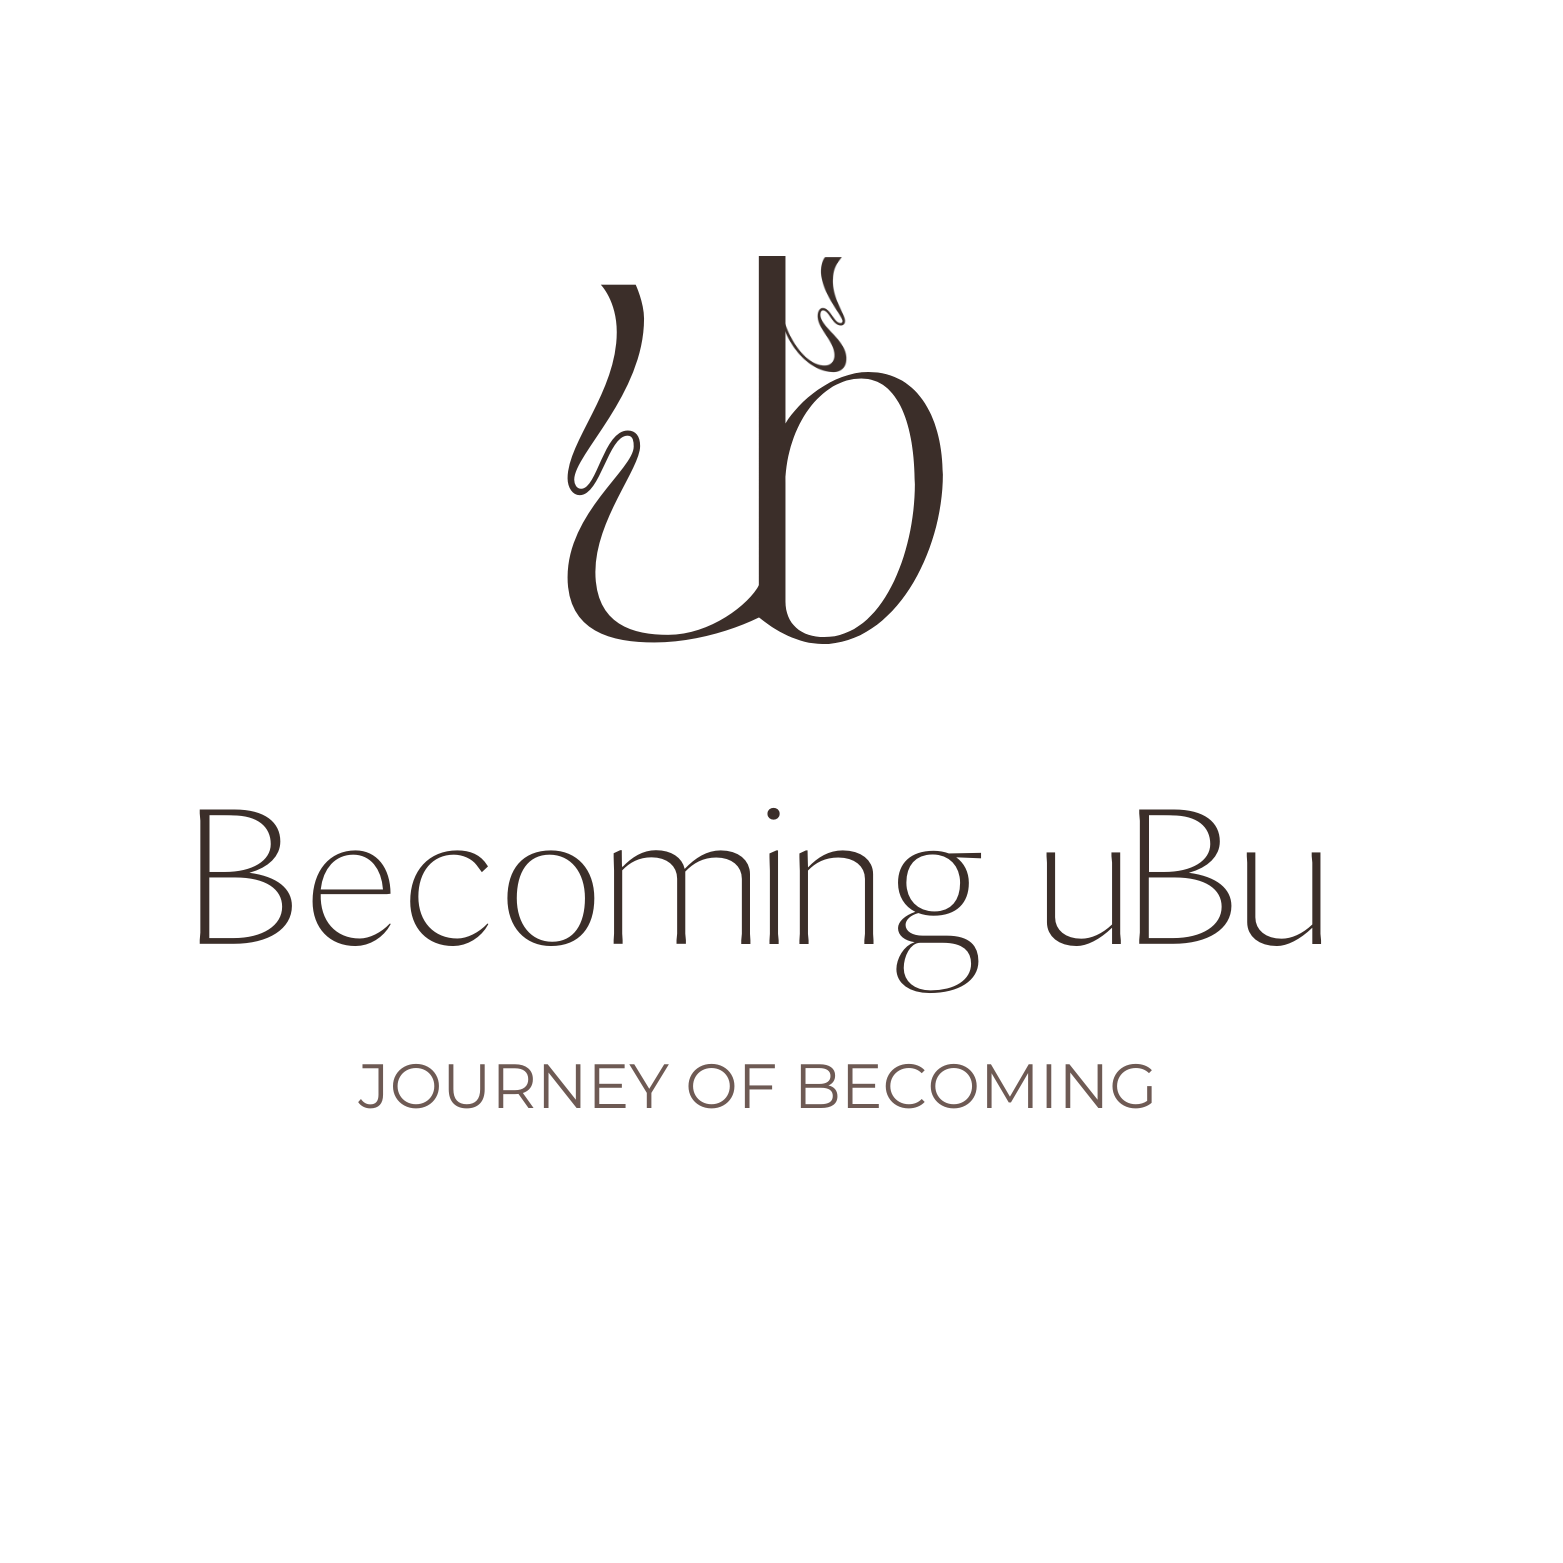 Becoming uBu